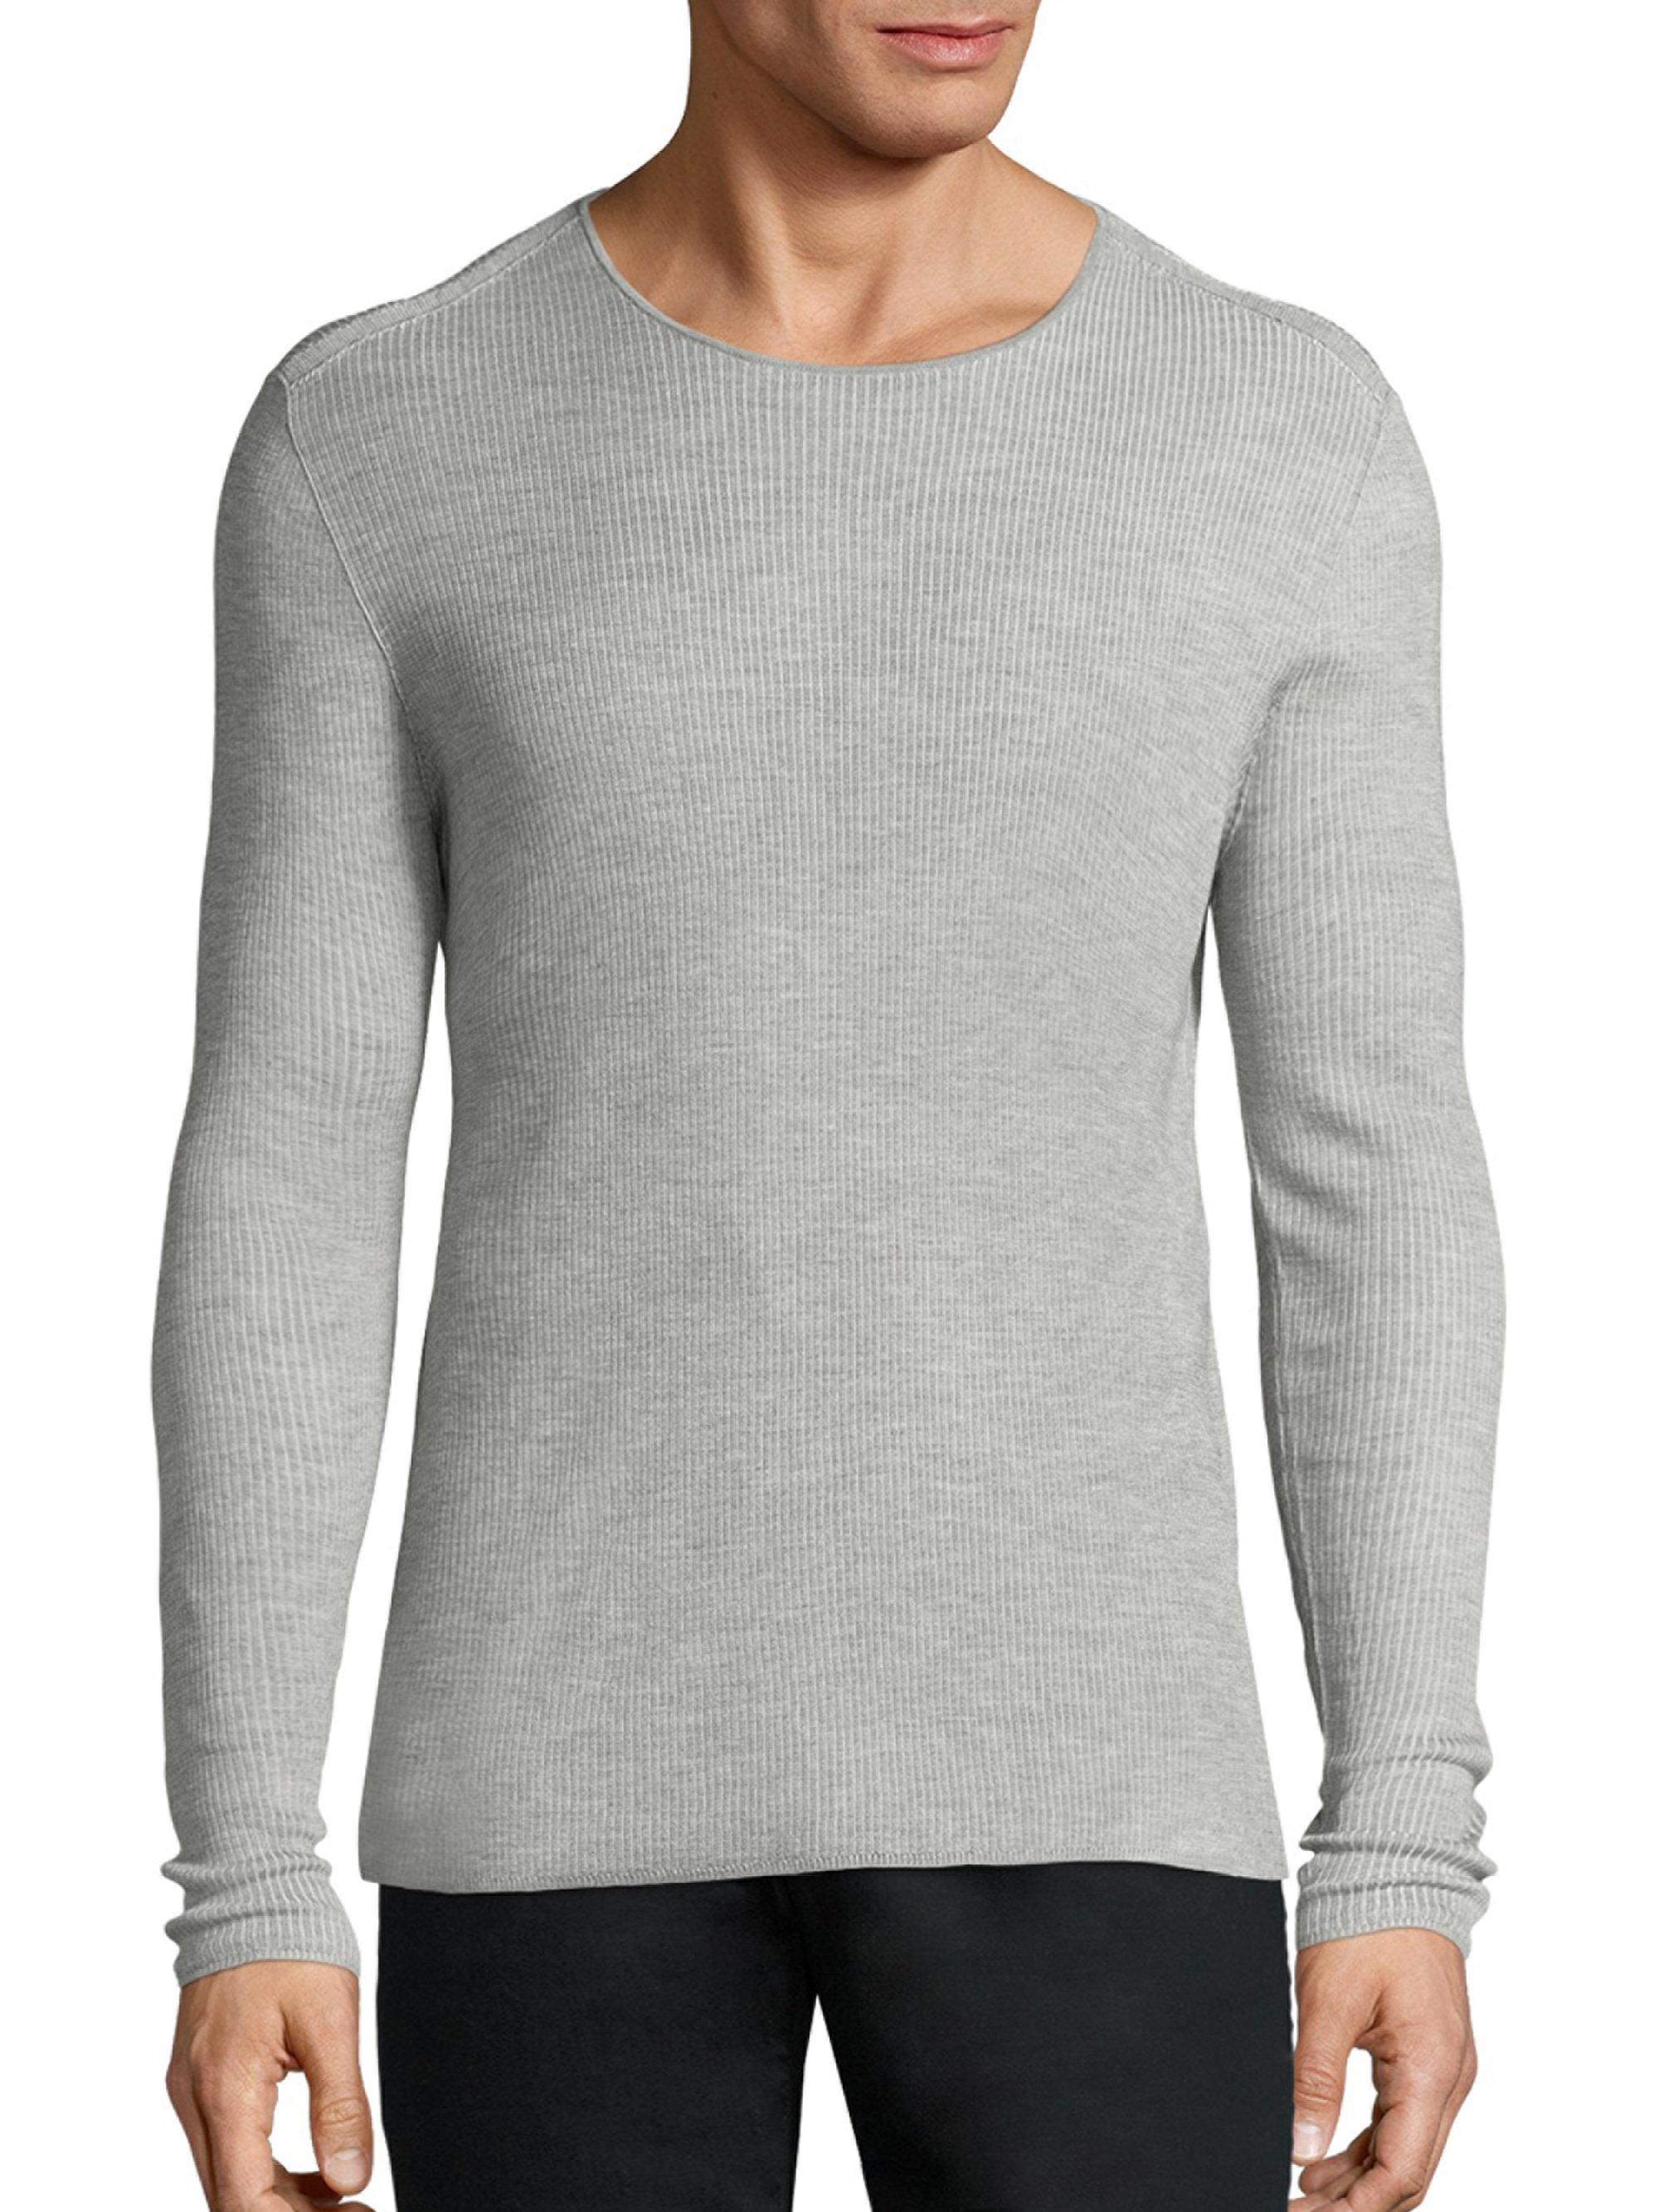 John Varvatos Silk Blend Long Sleeve Sweater in Light Grey (Gray) for